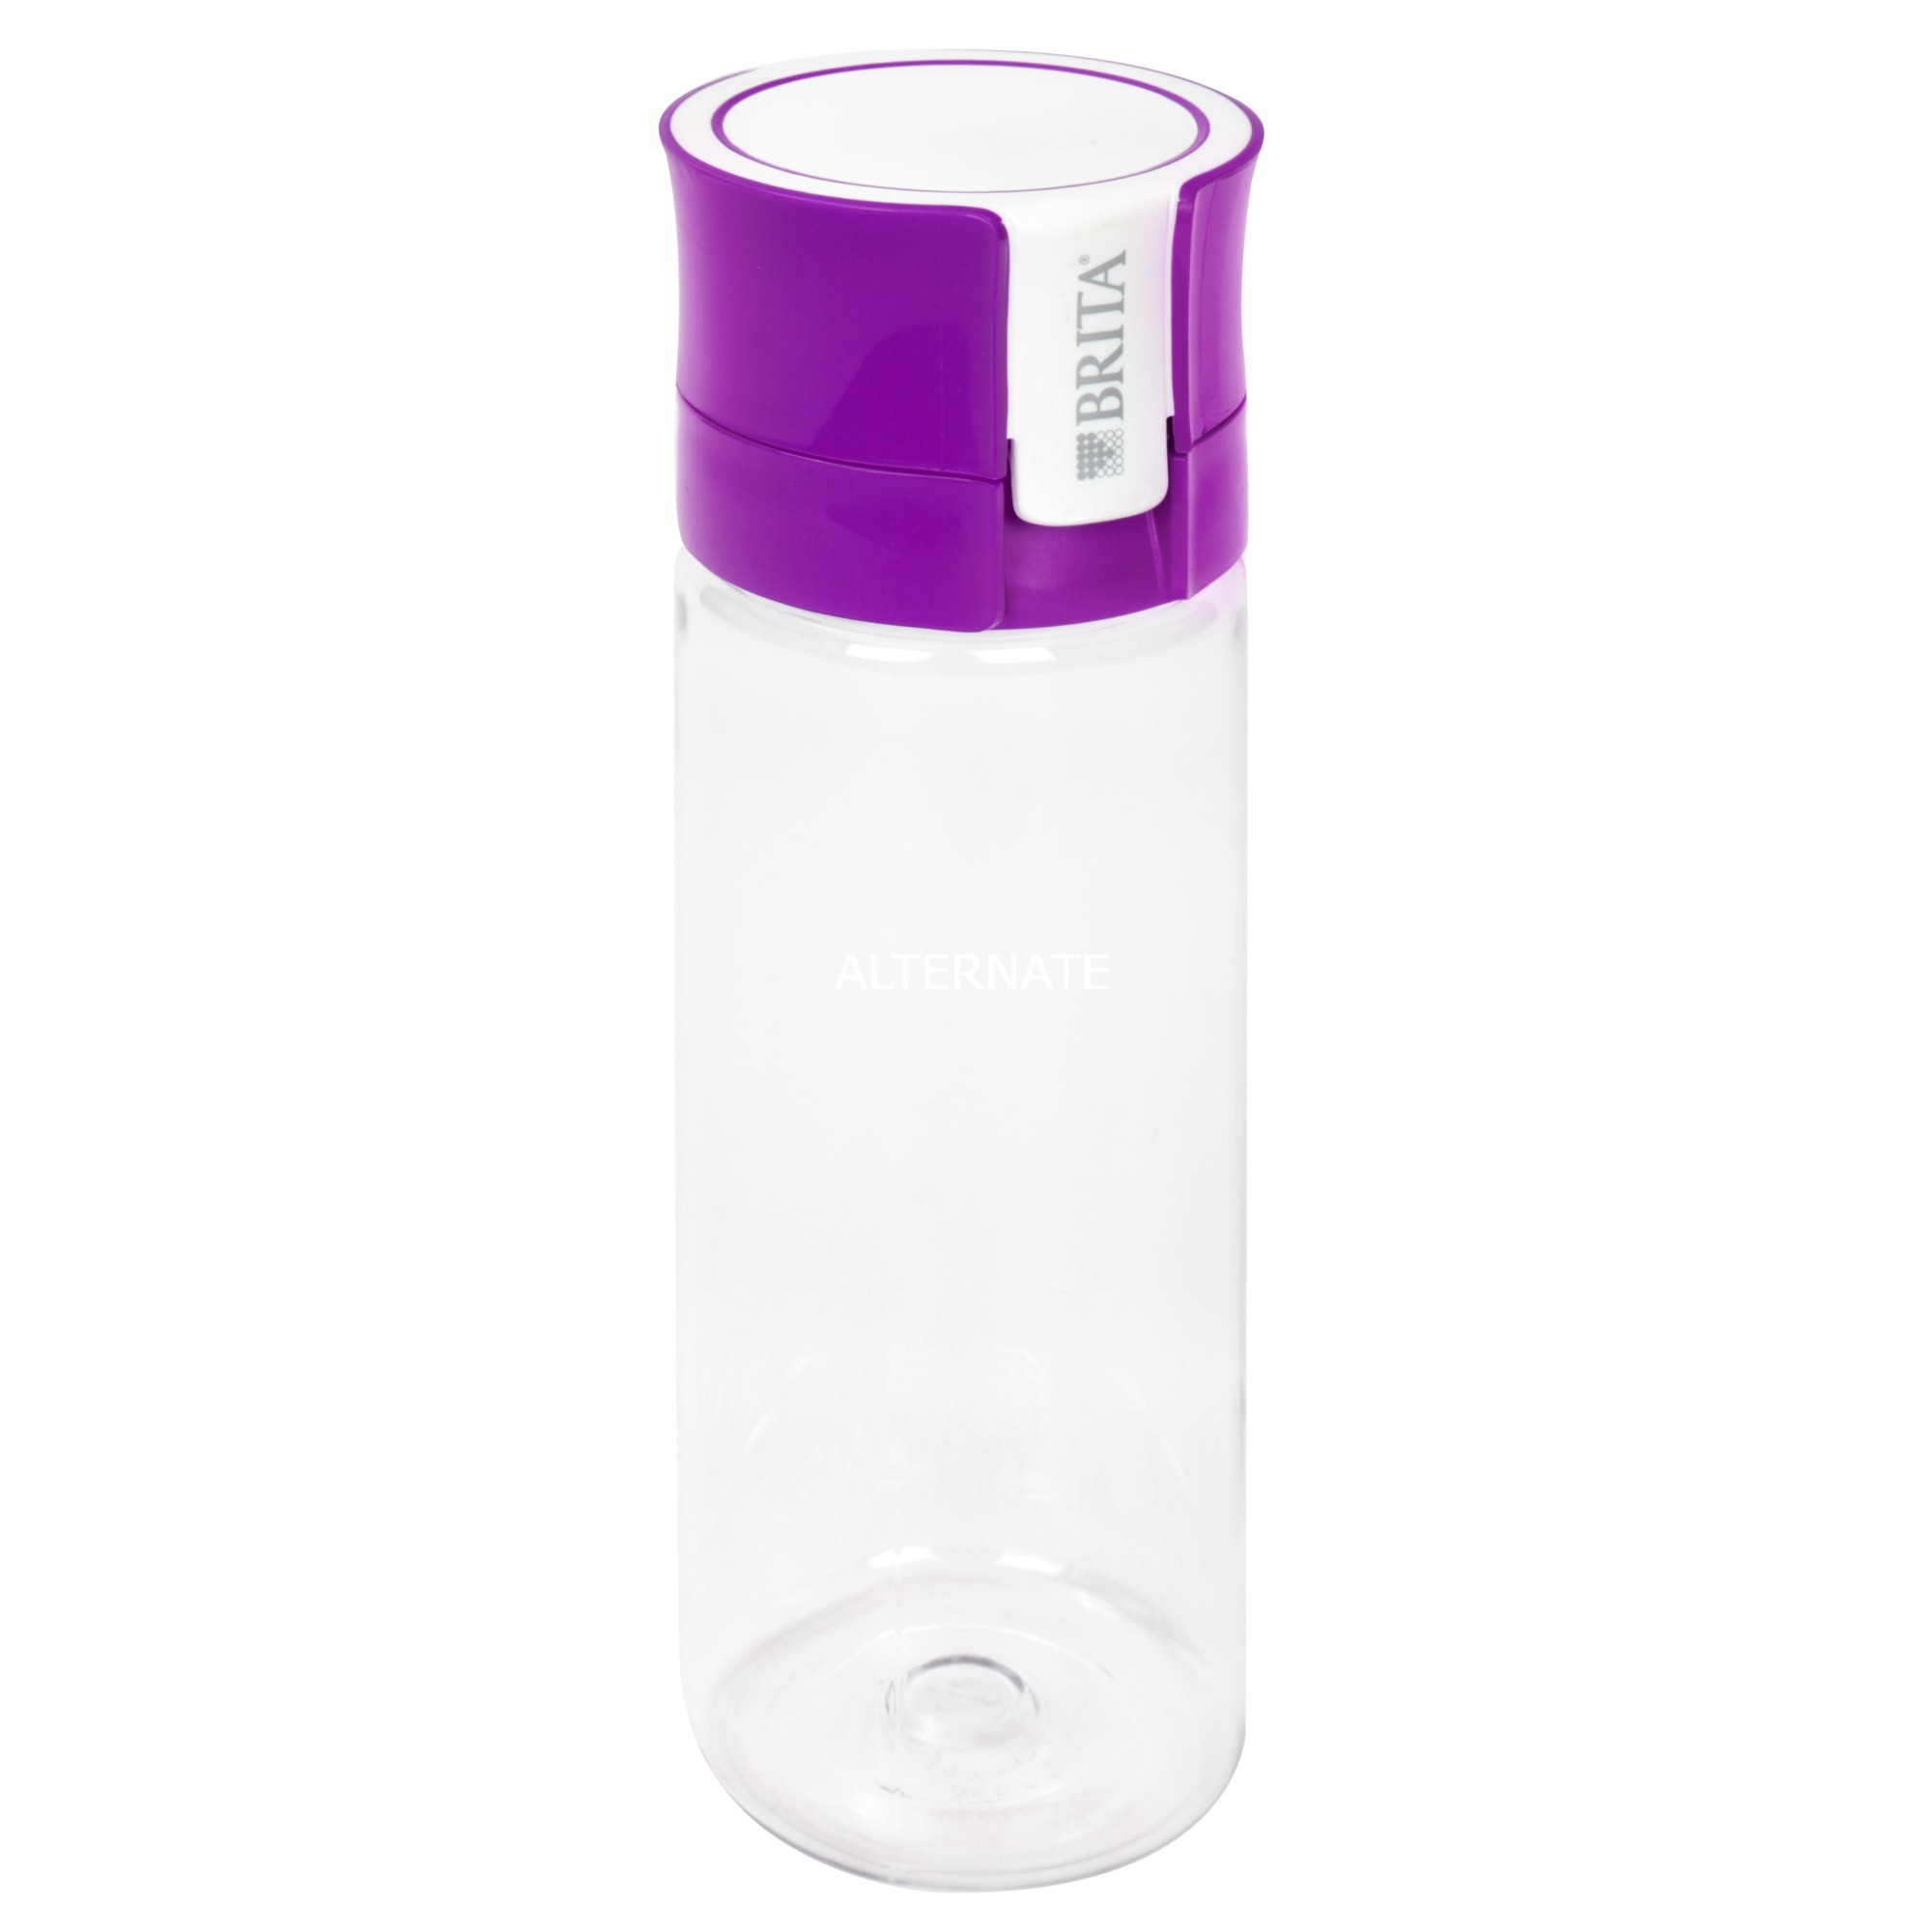 Fill&Go Bottle Filtr Purple Butelka filtrująca wodę Fioletowy, Przezroczysty, Filtr do wody